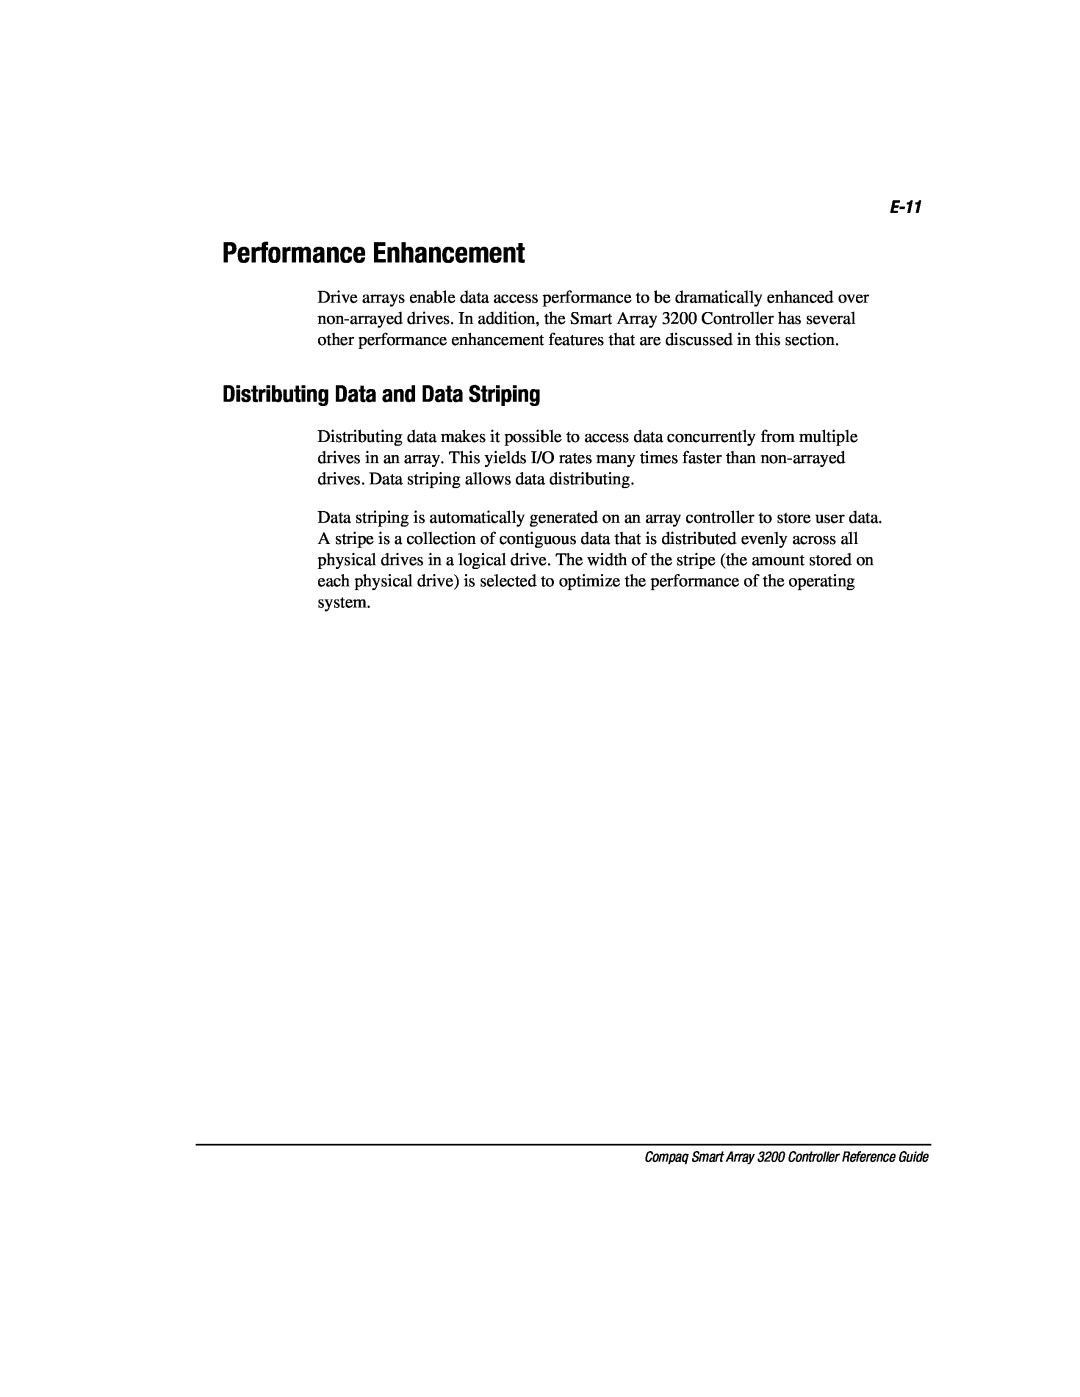 Compaq 3200 manual Performance Enhancement, Distributing Data and Data Striping, E-11 